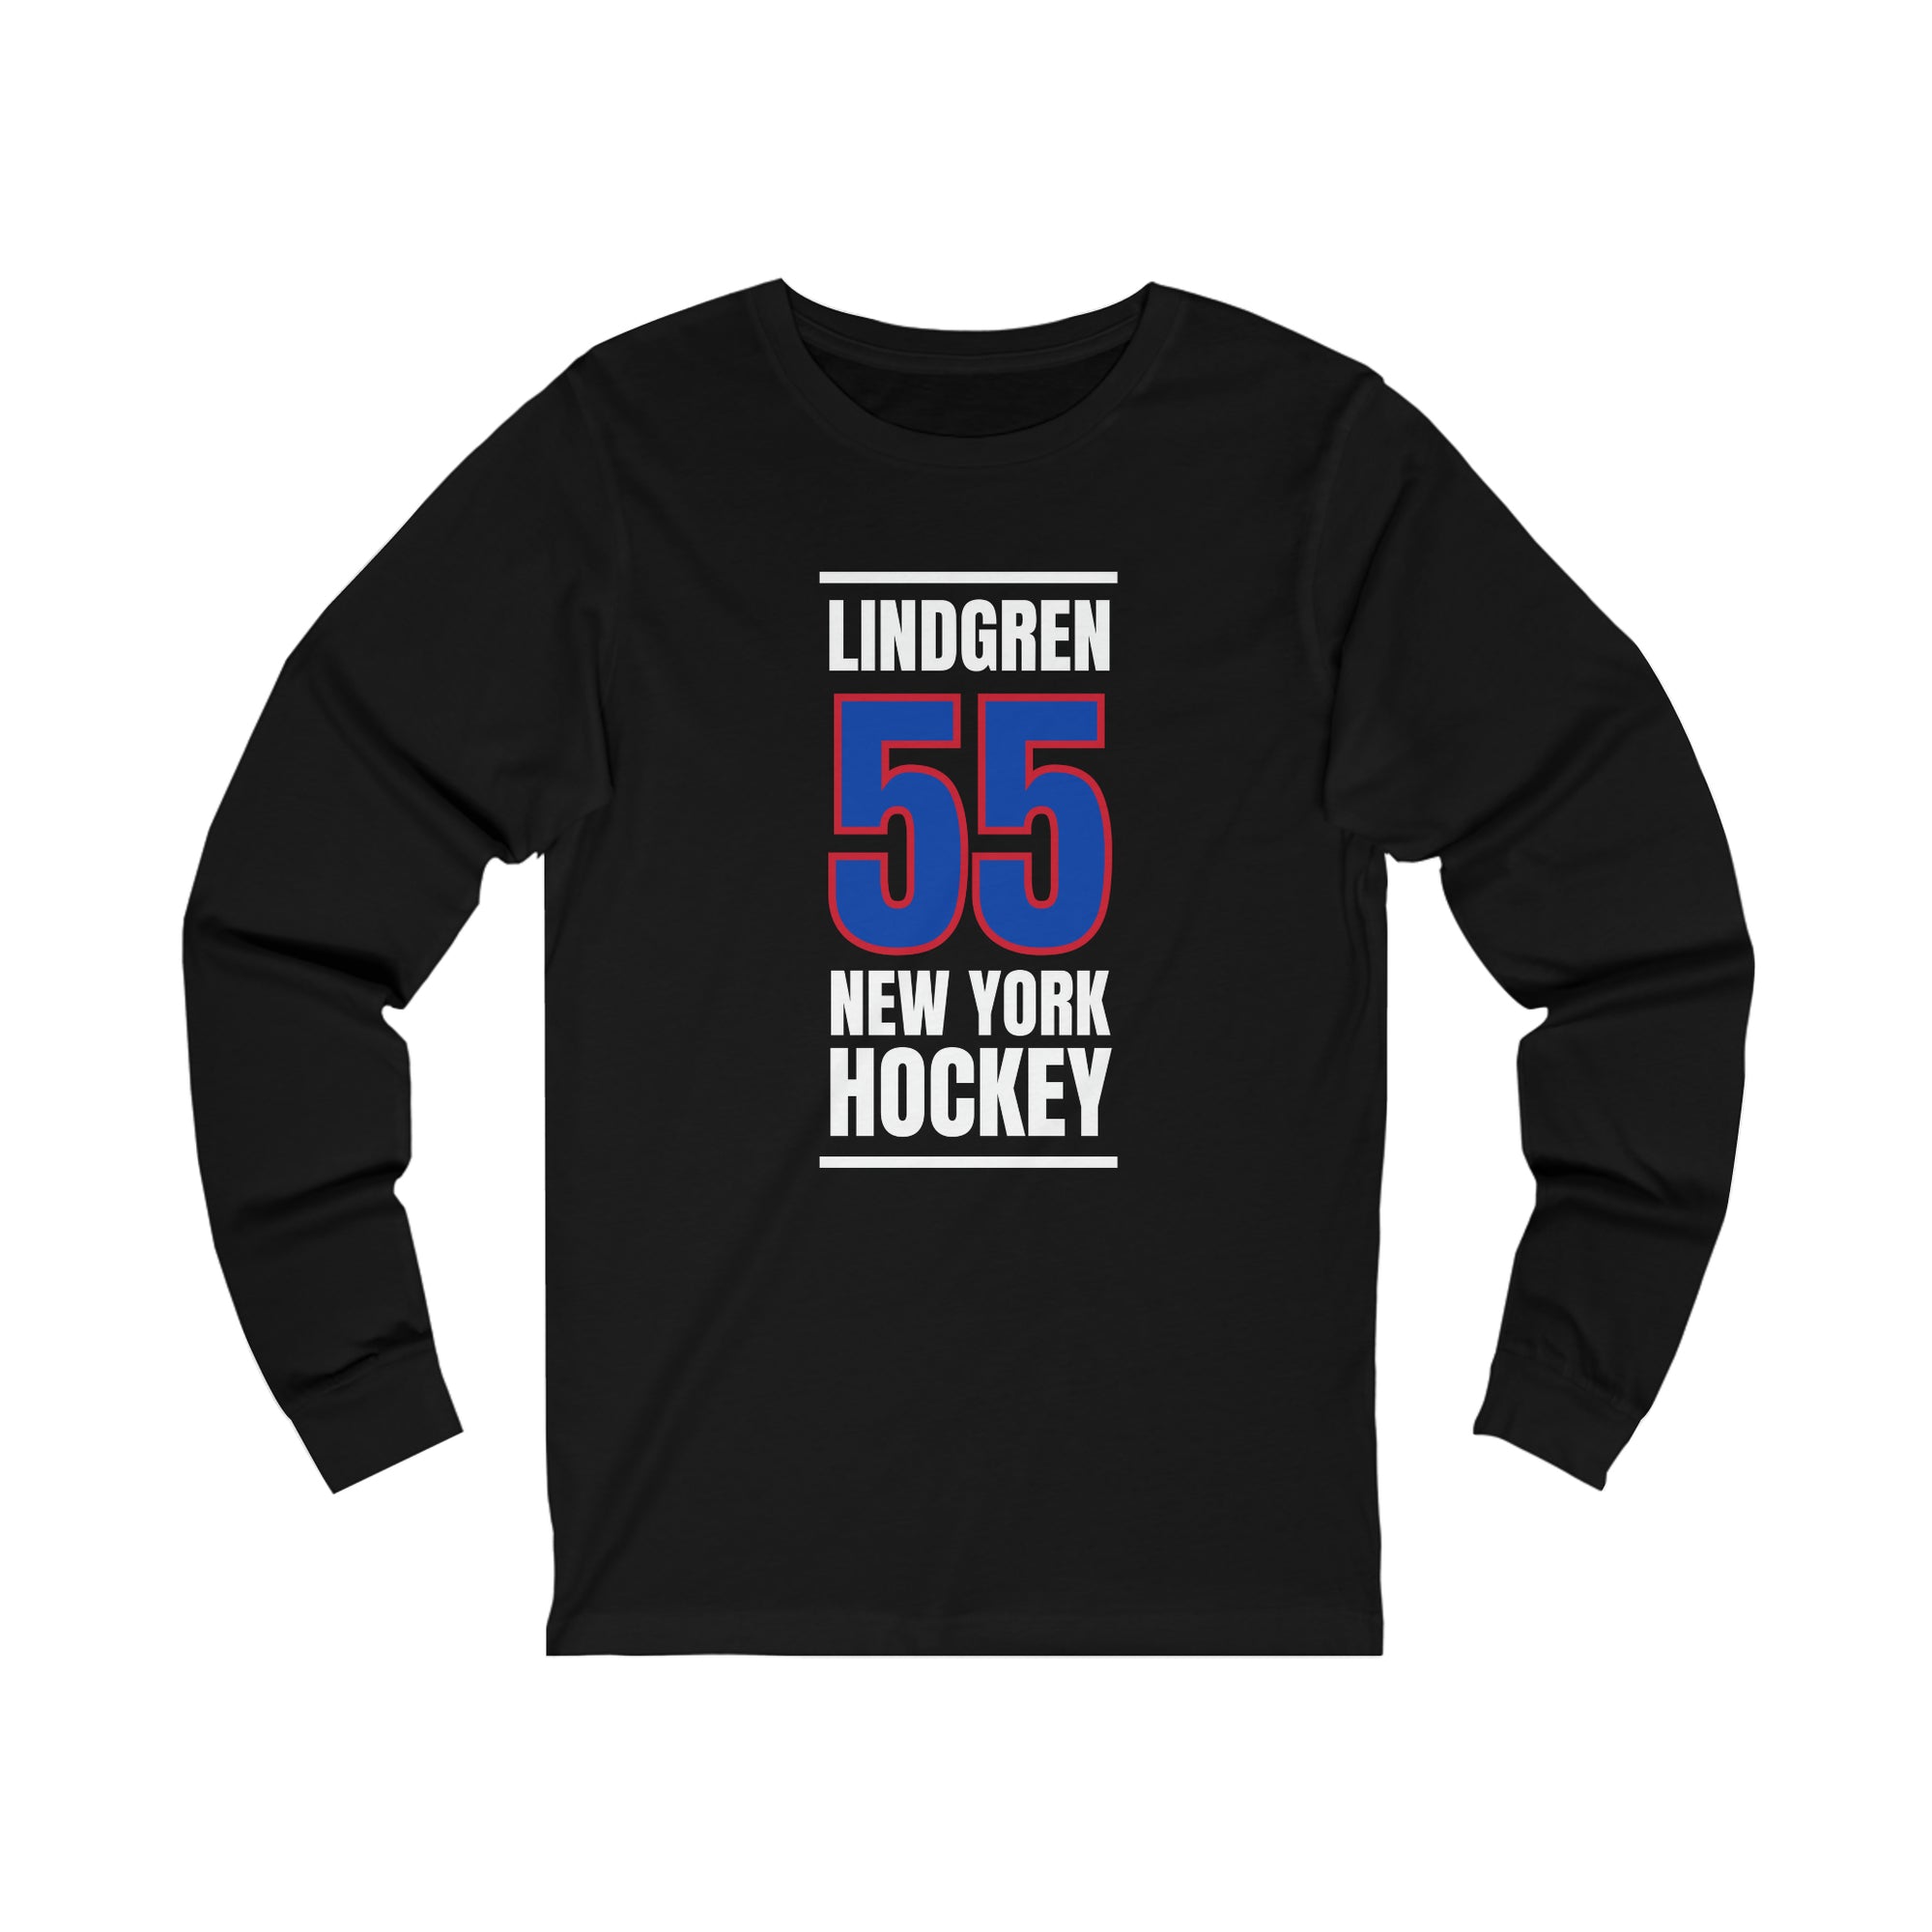 Lindgren 55 New York Rangers Unisex Hooded Sweatshirt - New York